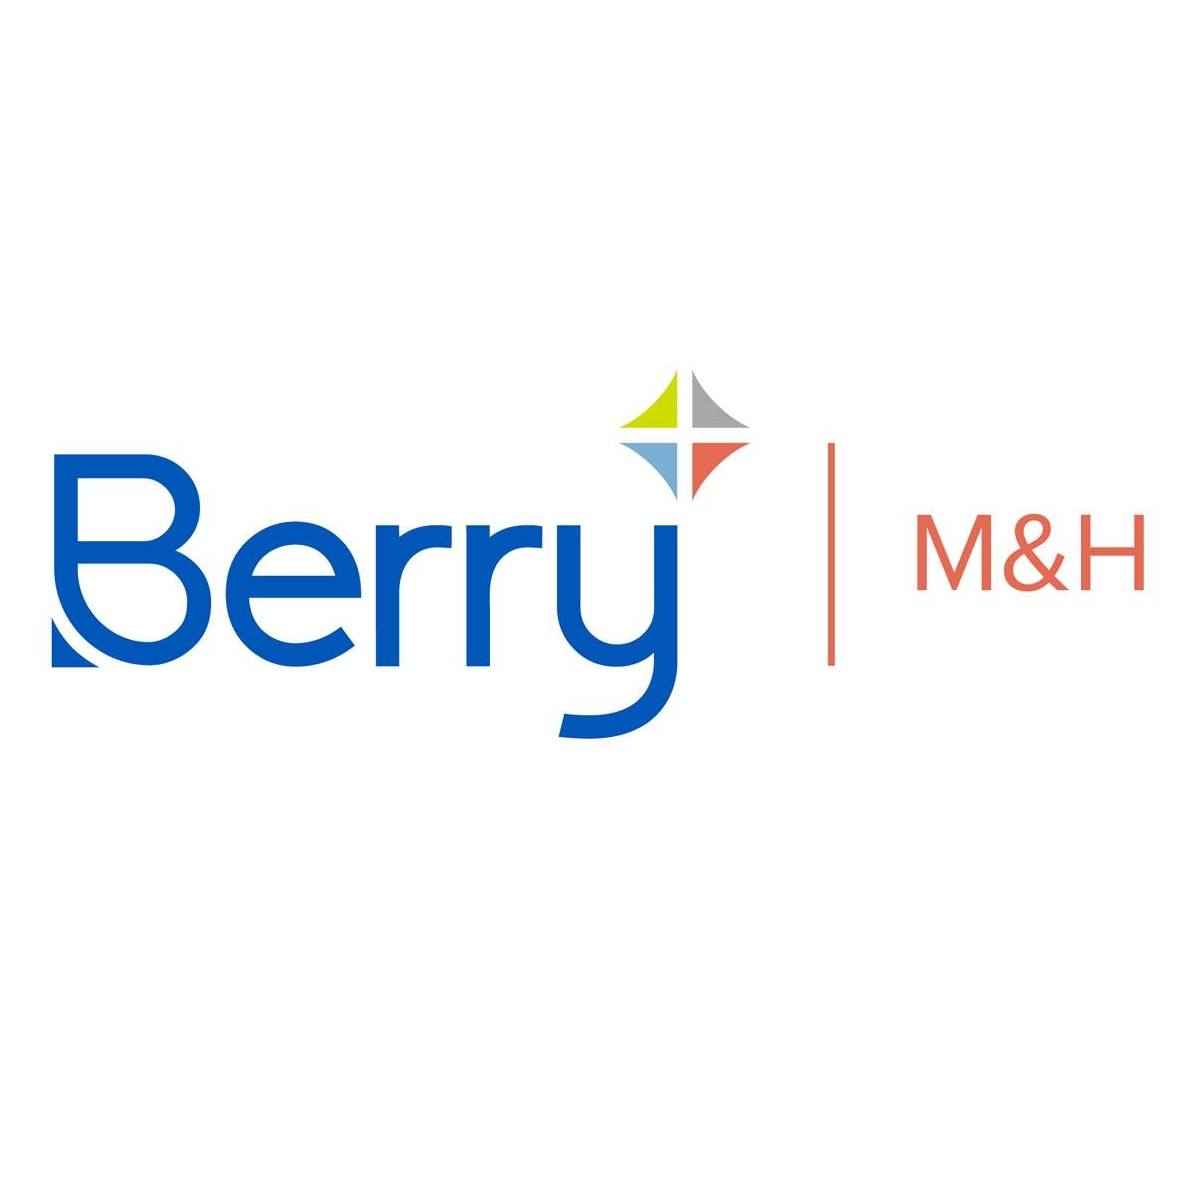 Berry M&H and Berry Bramlage